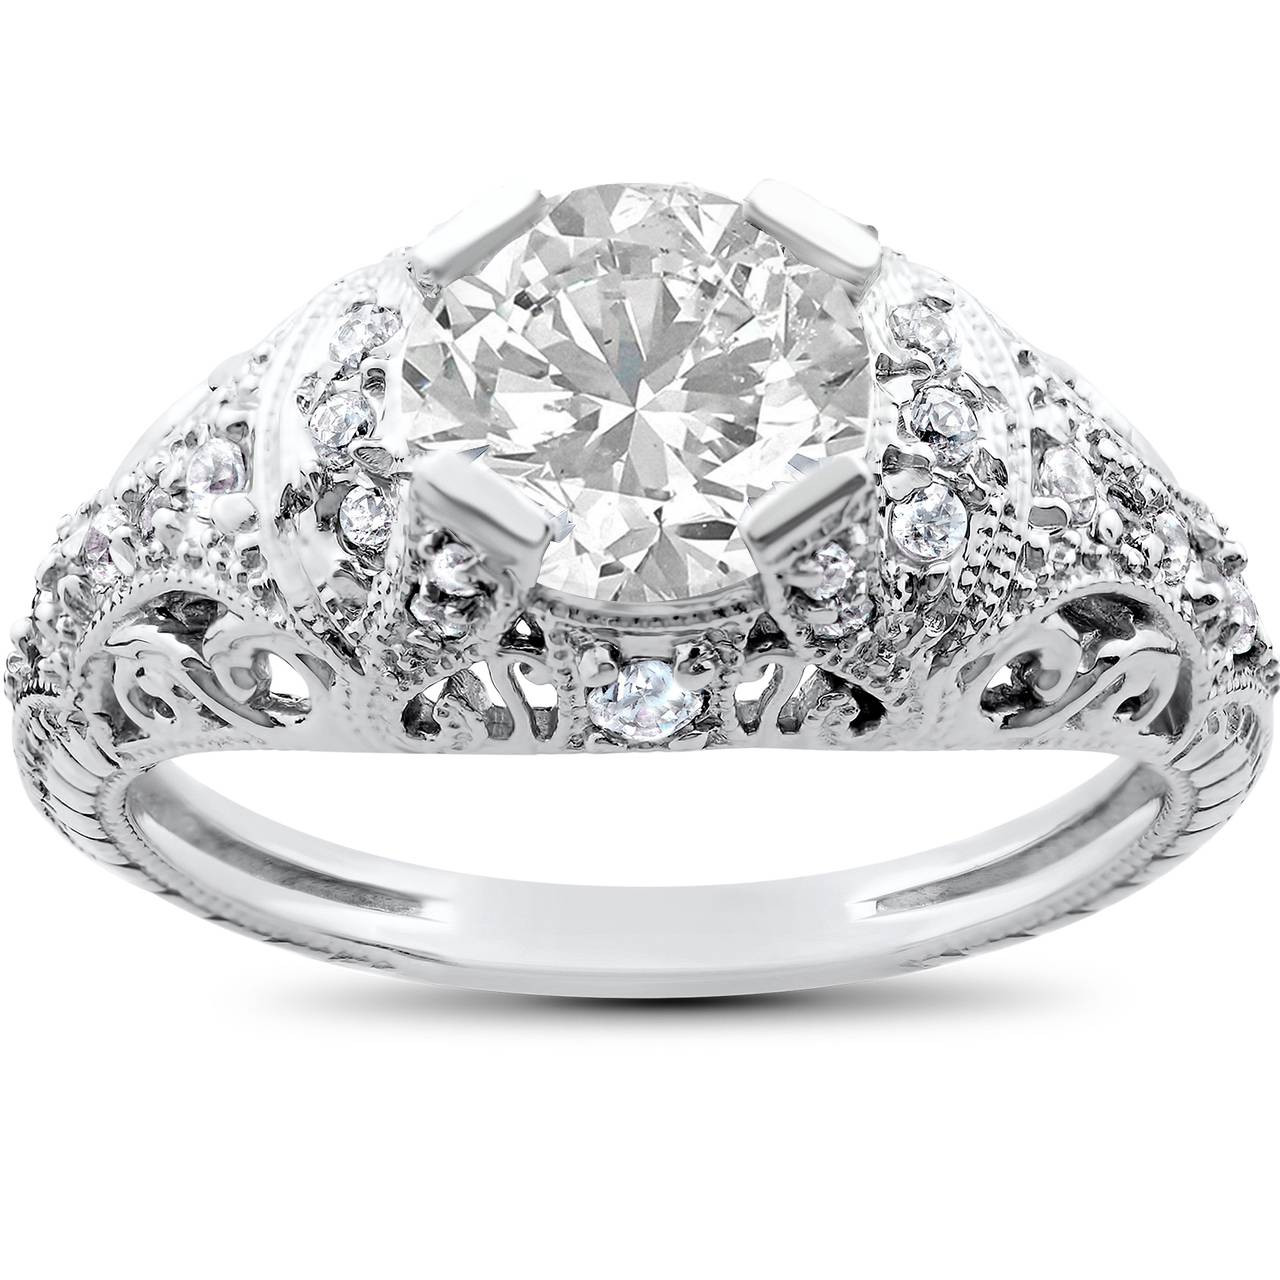 5ct Diamond Engagement Rings
 Vintage Enhanced Diamond Engagement Ring 1 1 5ct Filligre